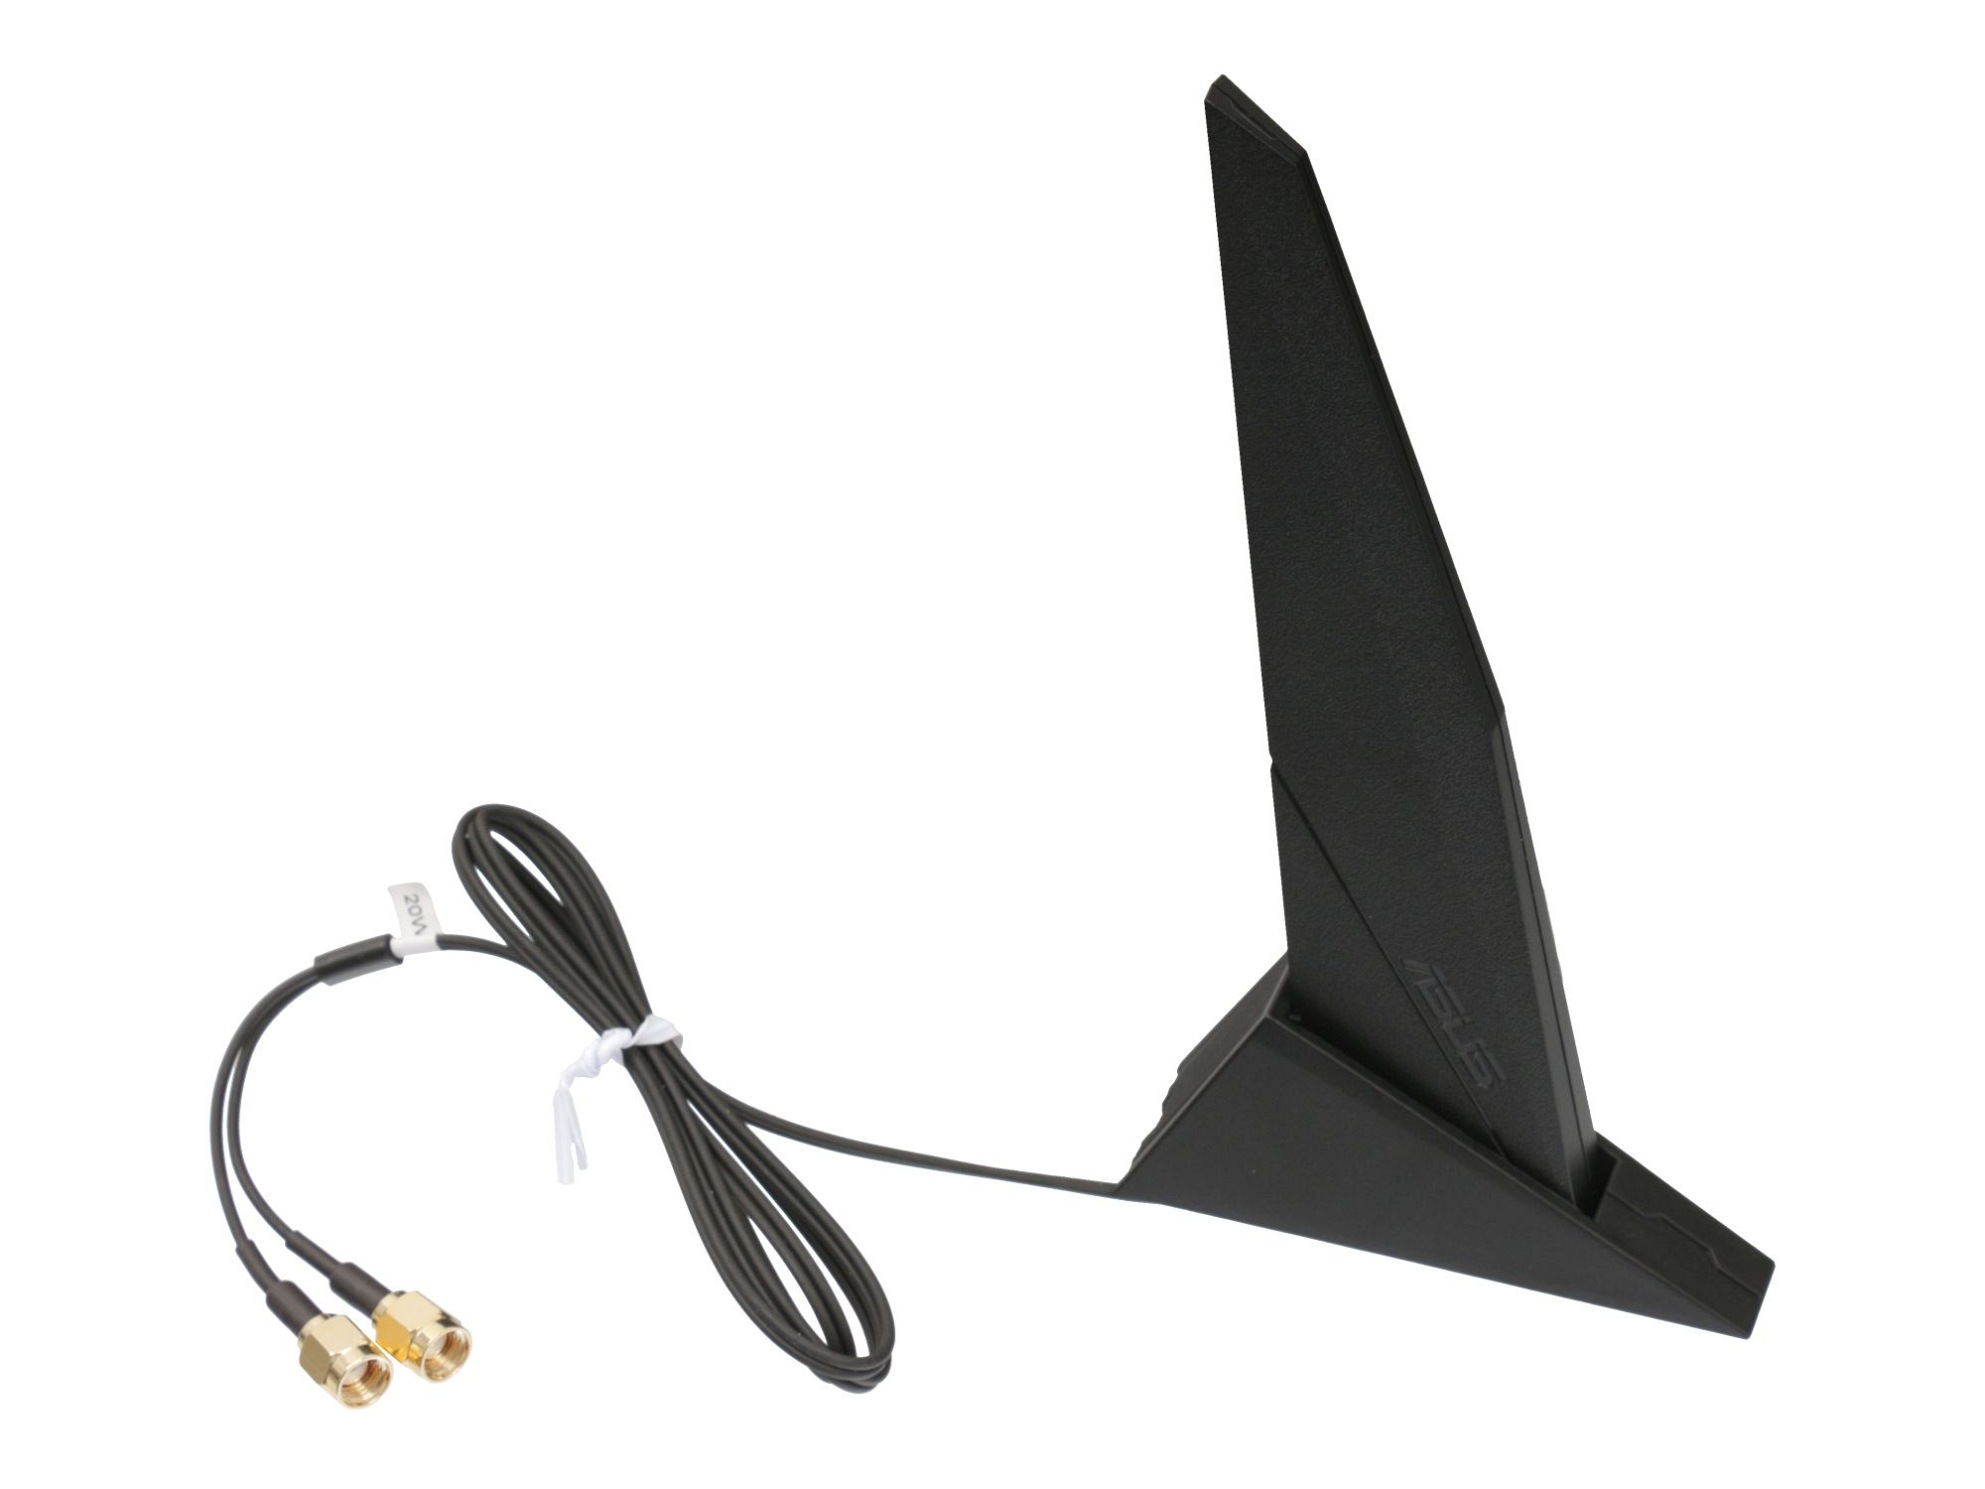 Externe Asus RP-SMA DIPOLE Antenne für Asus TUF GAMING Z490-PLUS